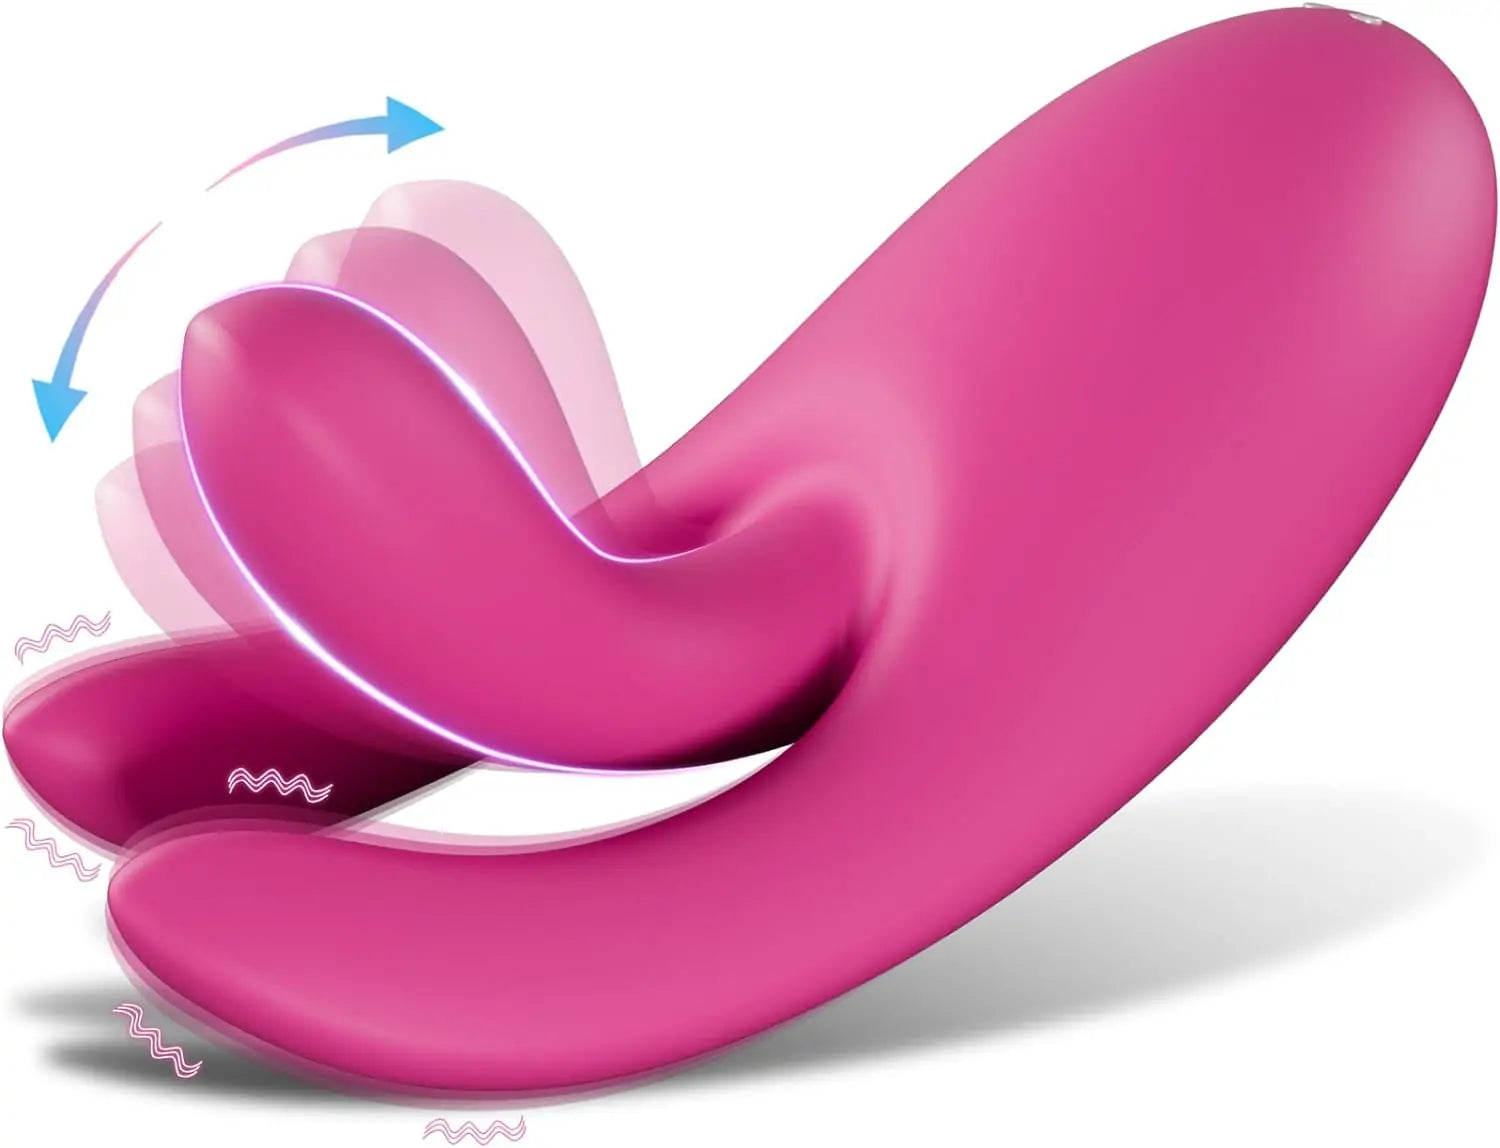 Flexer - Hands-free Panty Vibrator for Clit & G-spot Stimulation and Fingering Sensation